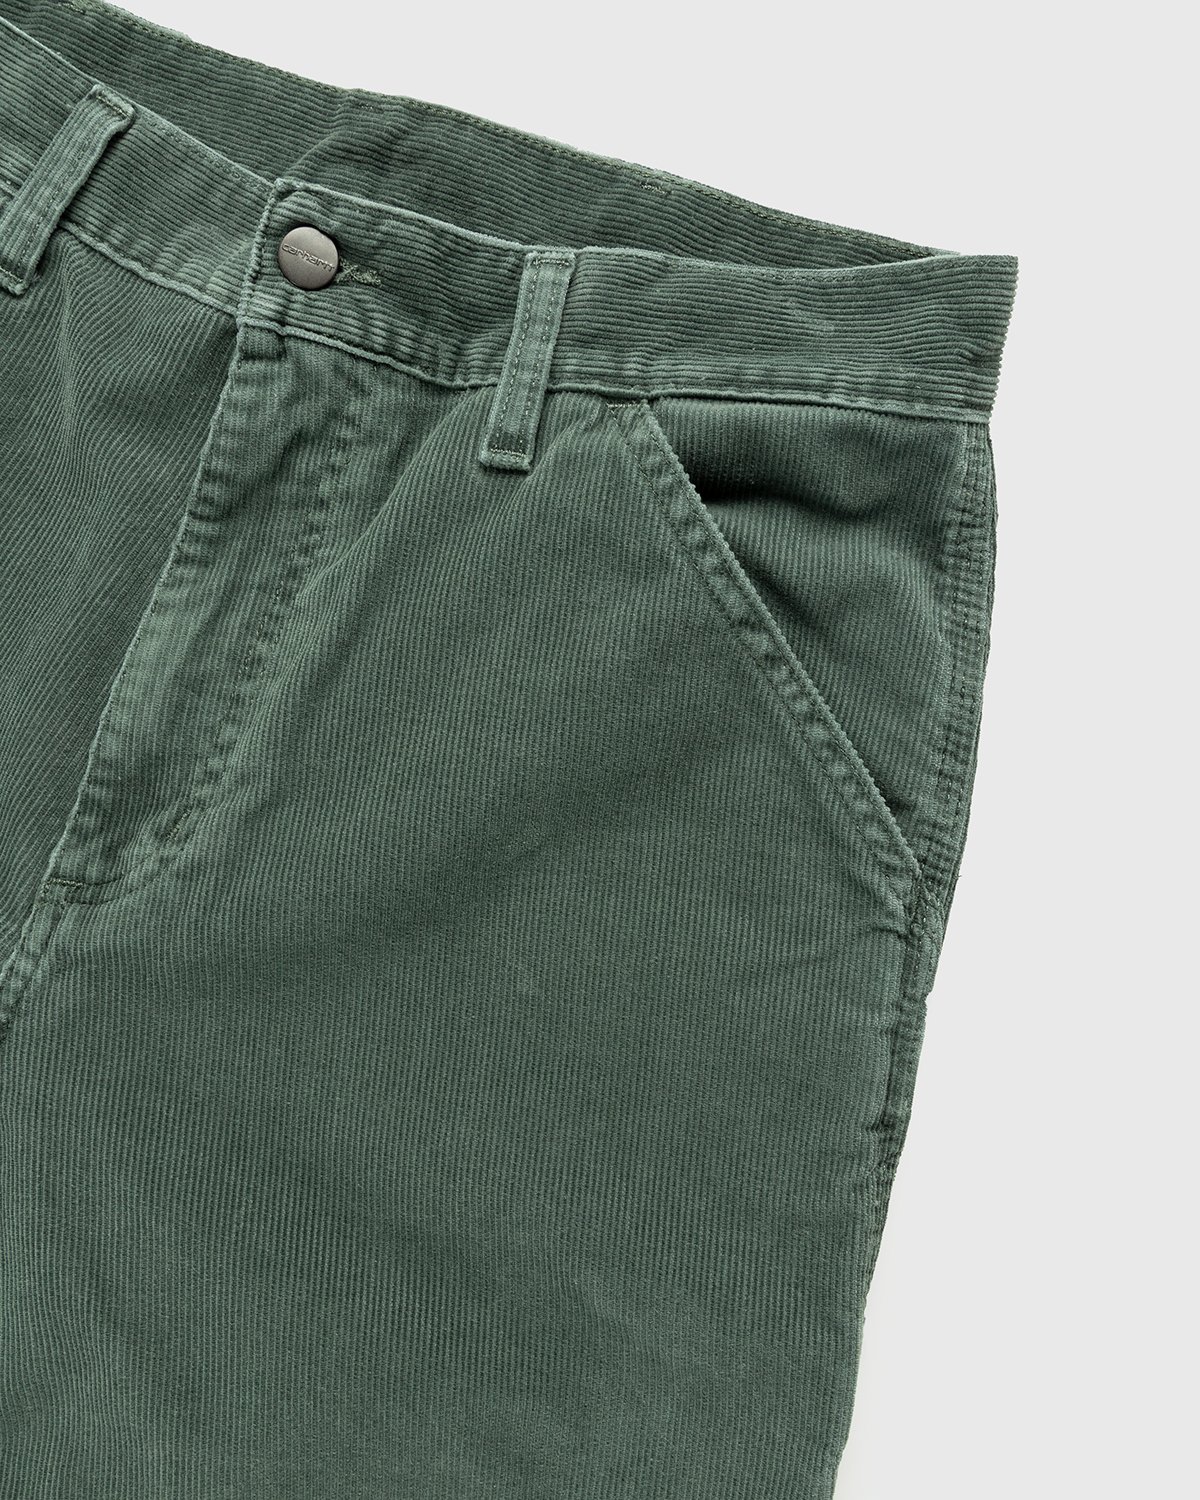 Carhartt WIP - Single Knee Pant Hemlock Green Stone Wash - Clothing - Green - Image 4